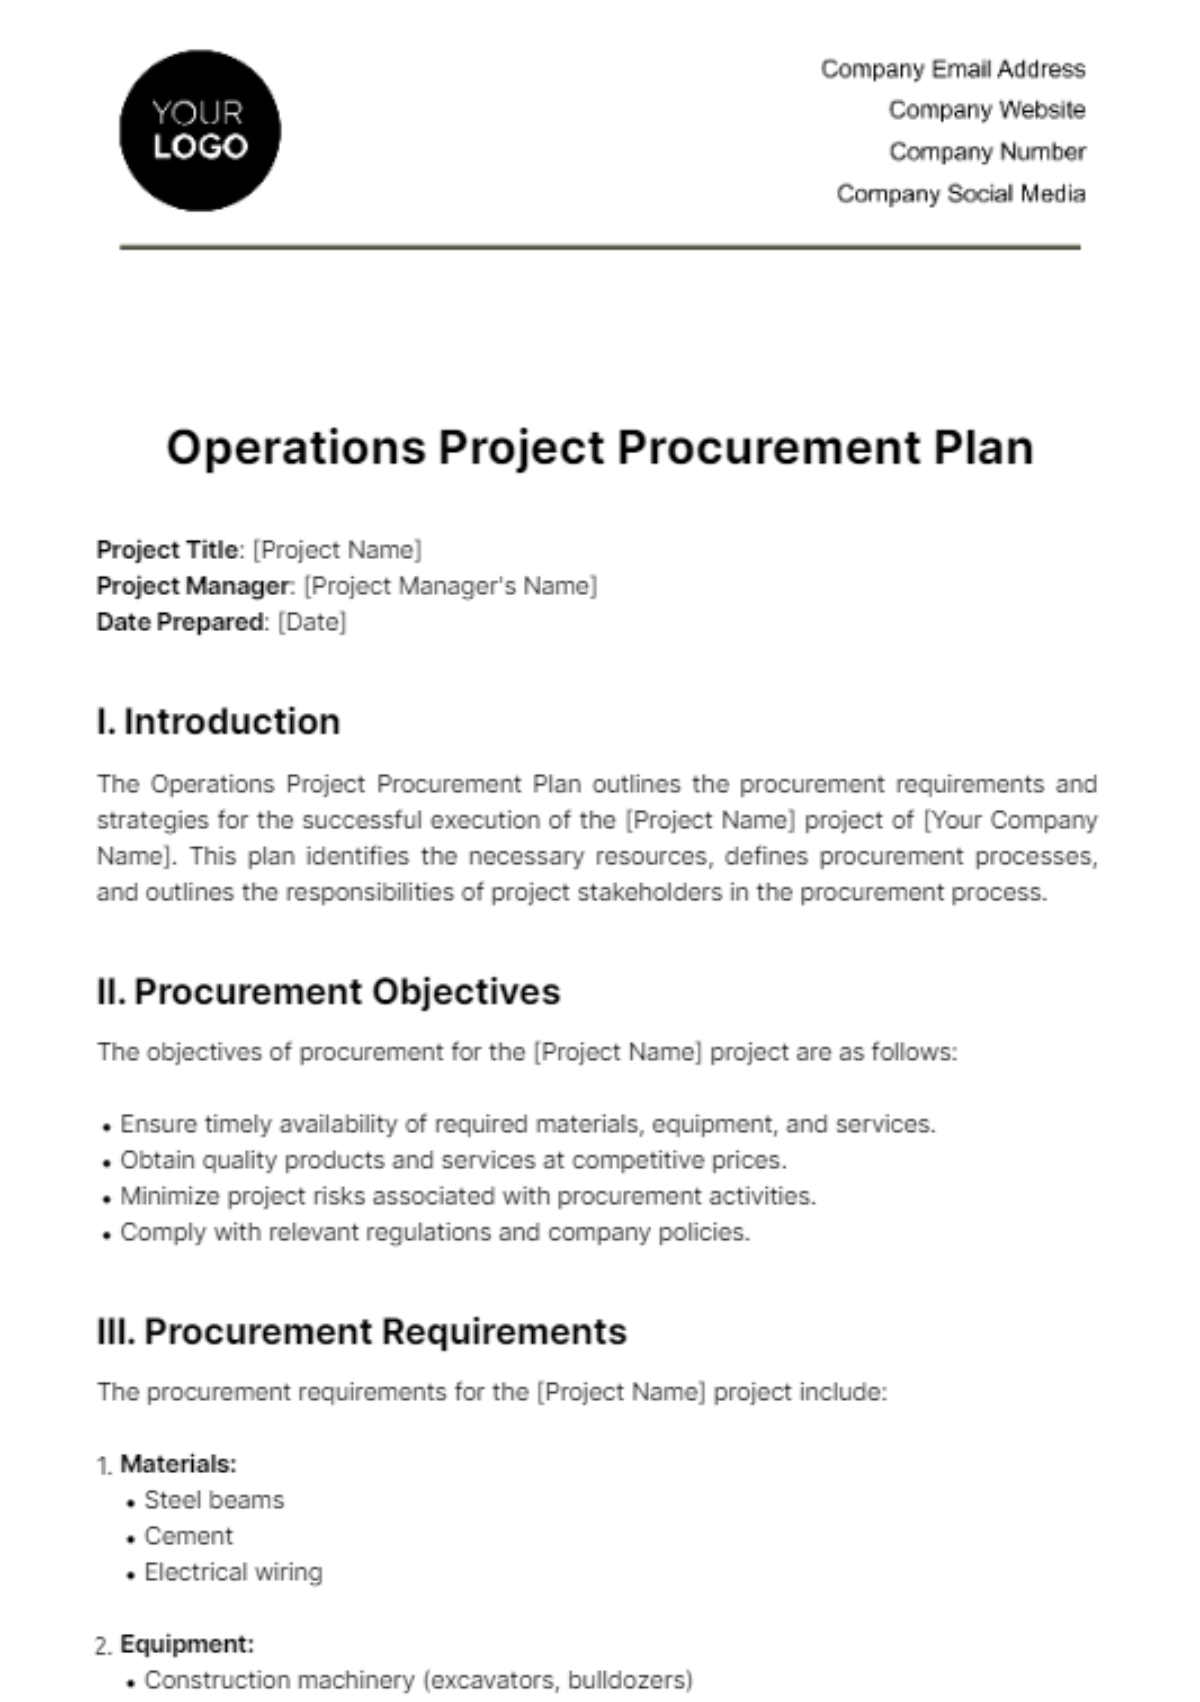 Operations Project Procurement Plan Template